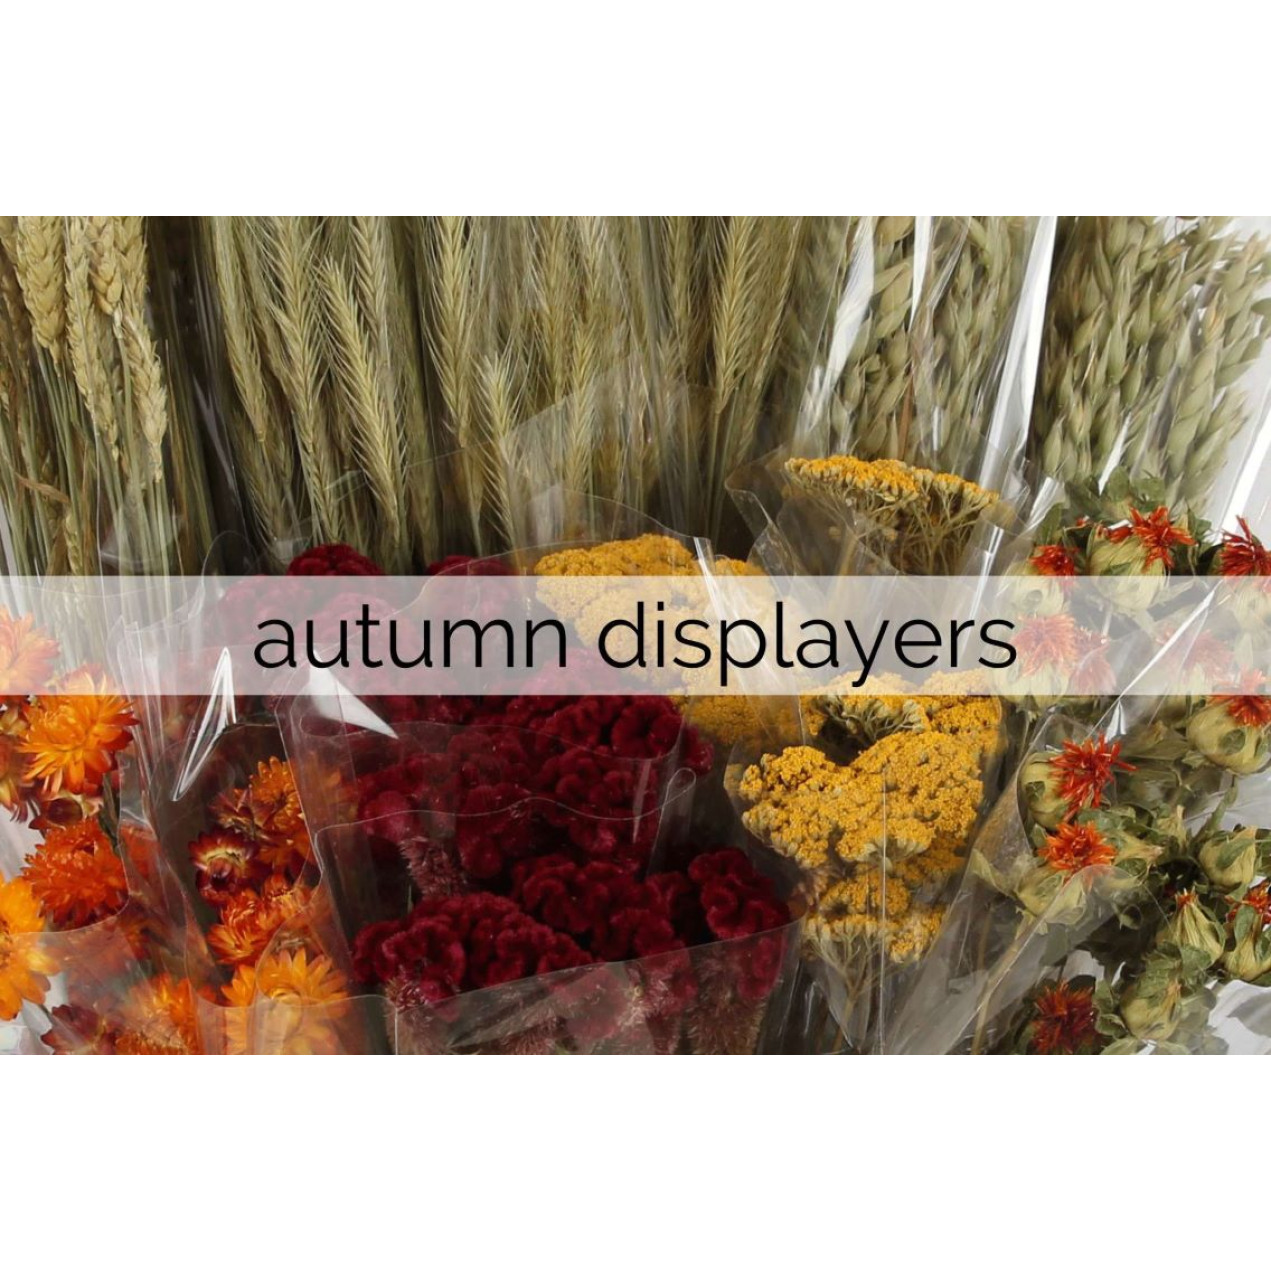 autumn displayers